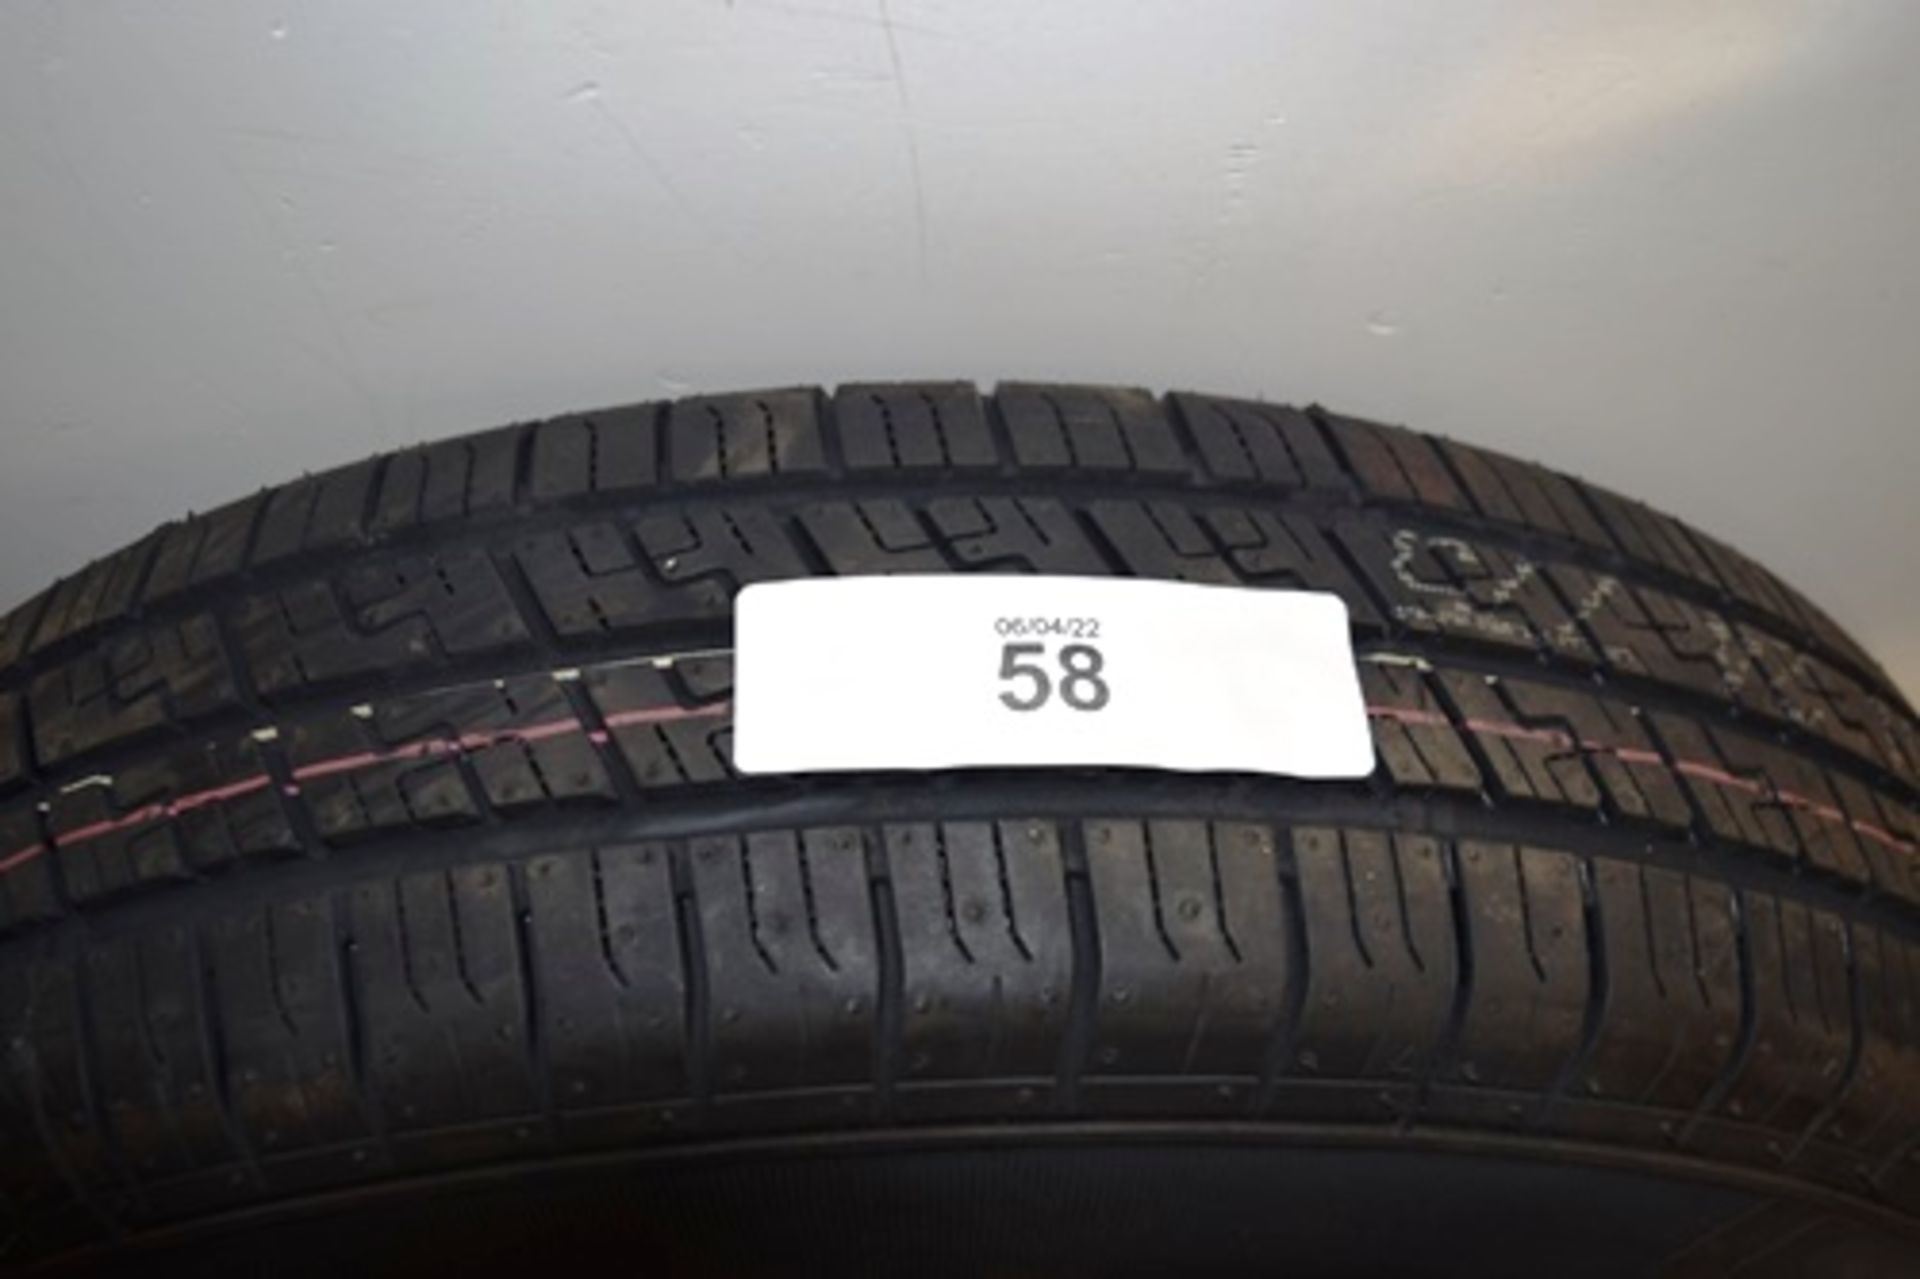 1 x Kenda Mastertrail 3G tyre, size 165R13C 96/94N on steel 4 stud rim - New (GS7)